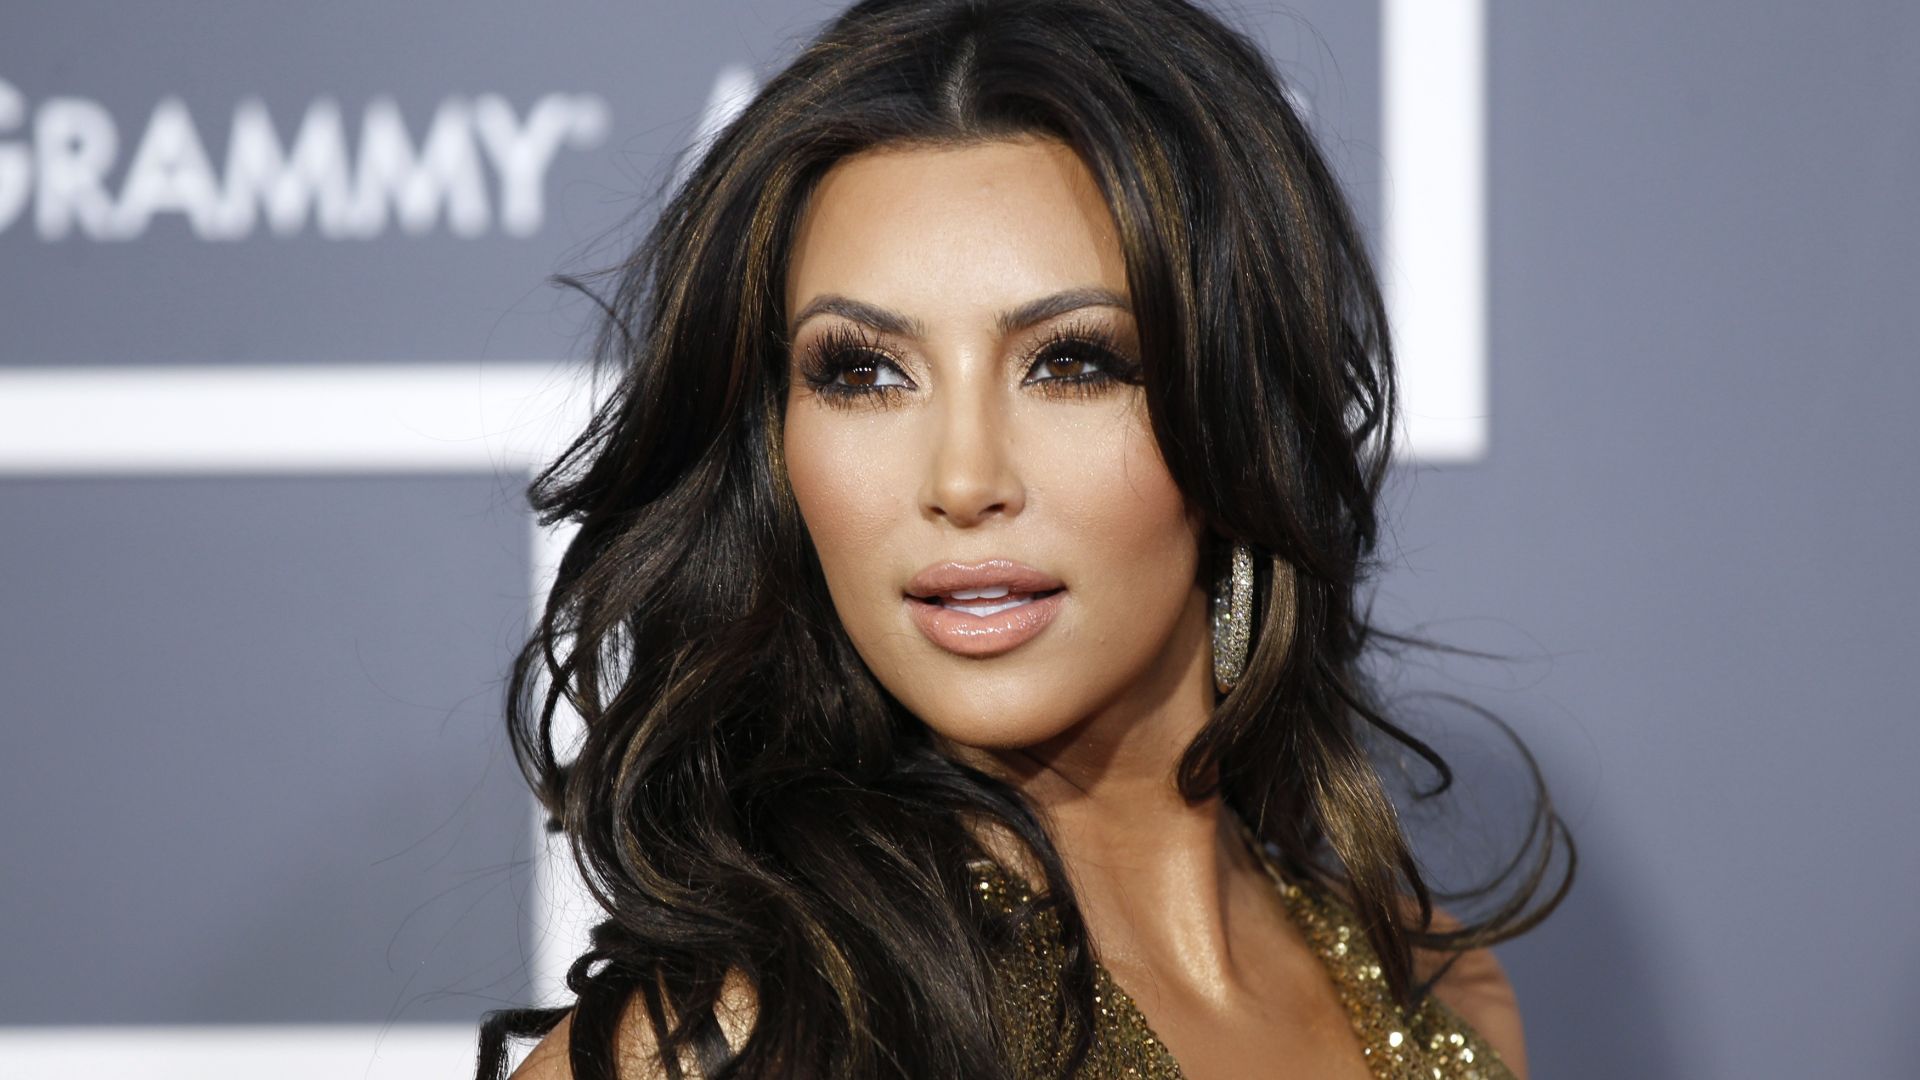 Wallpaper Kim Kardashian, American popular celebrity